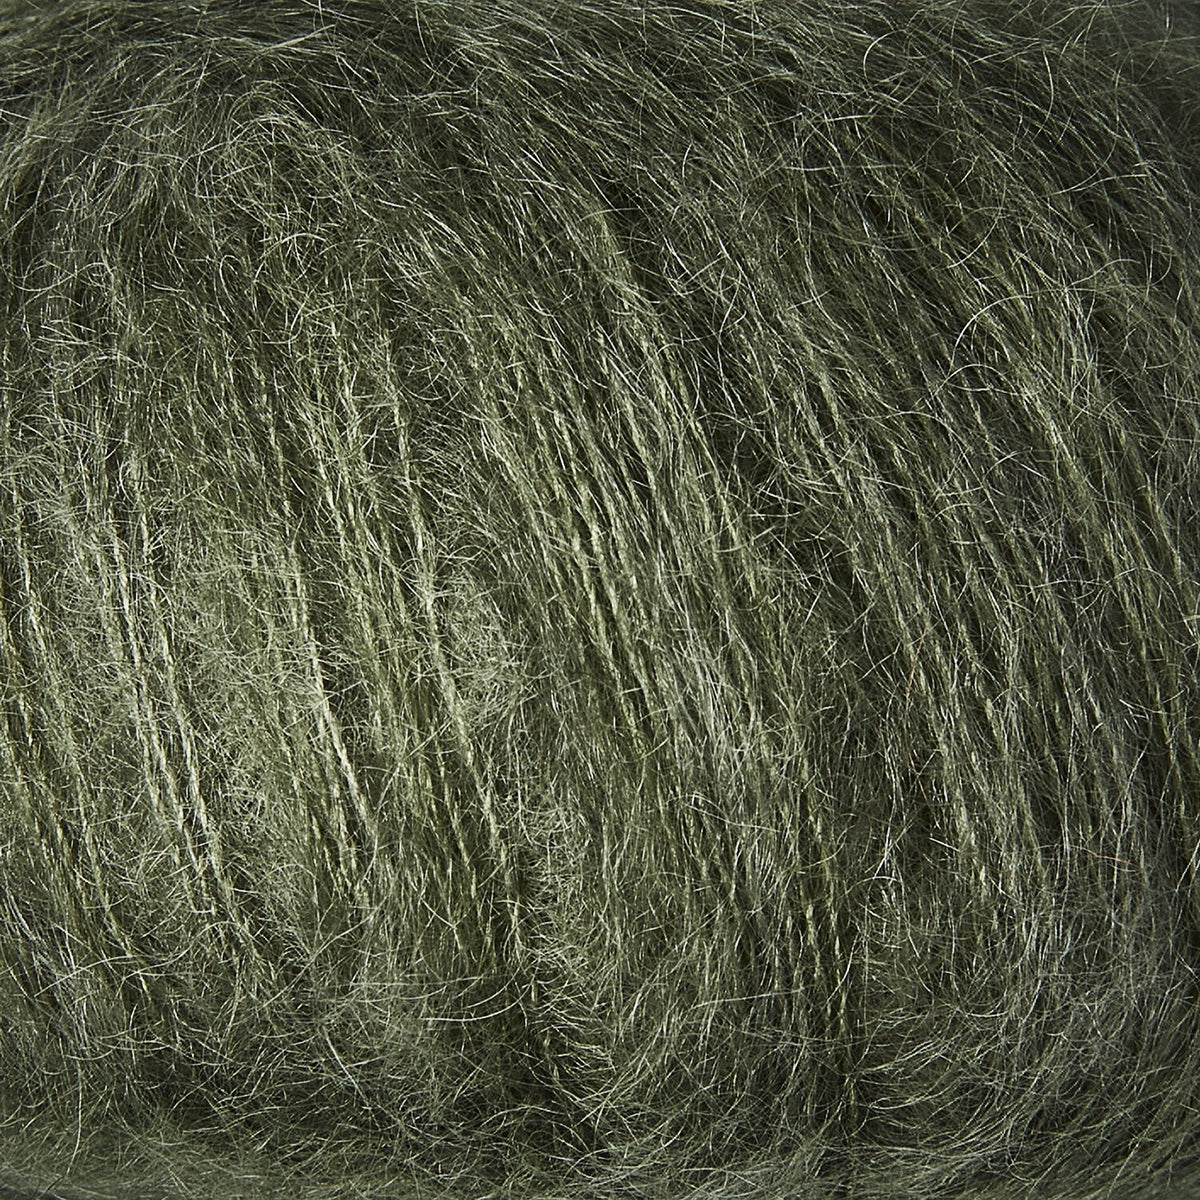 Støvet Søgrøn / Dusty Sea Green - Soft Silk Mohair